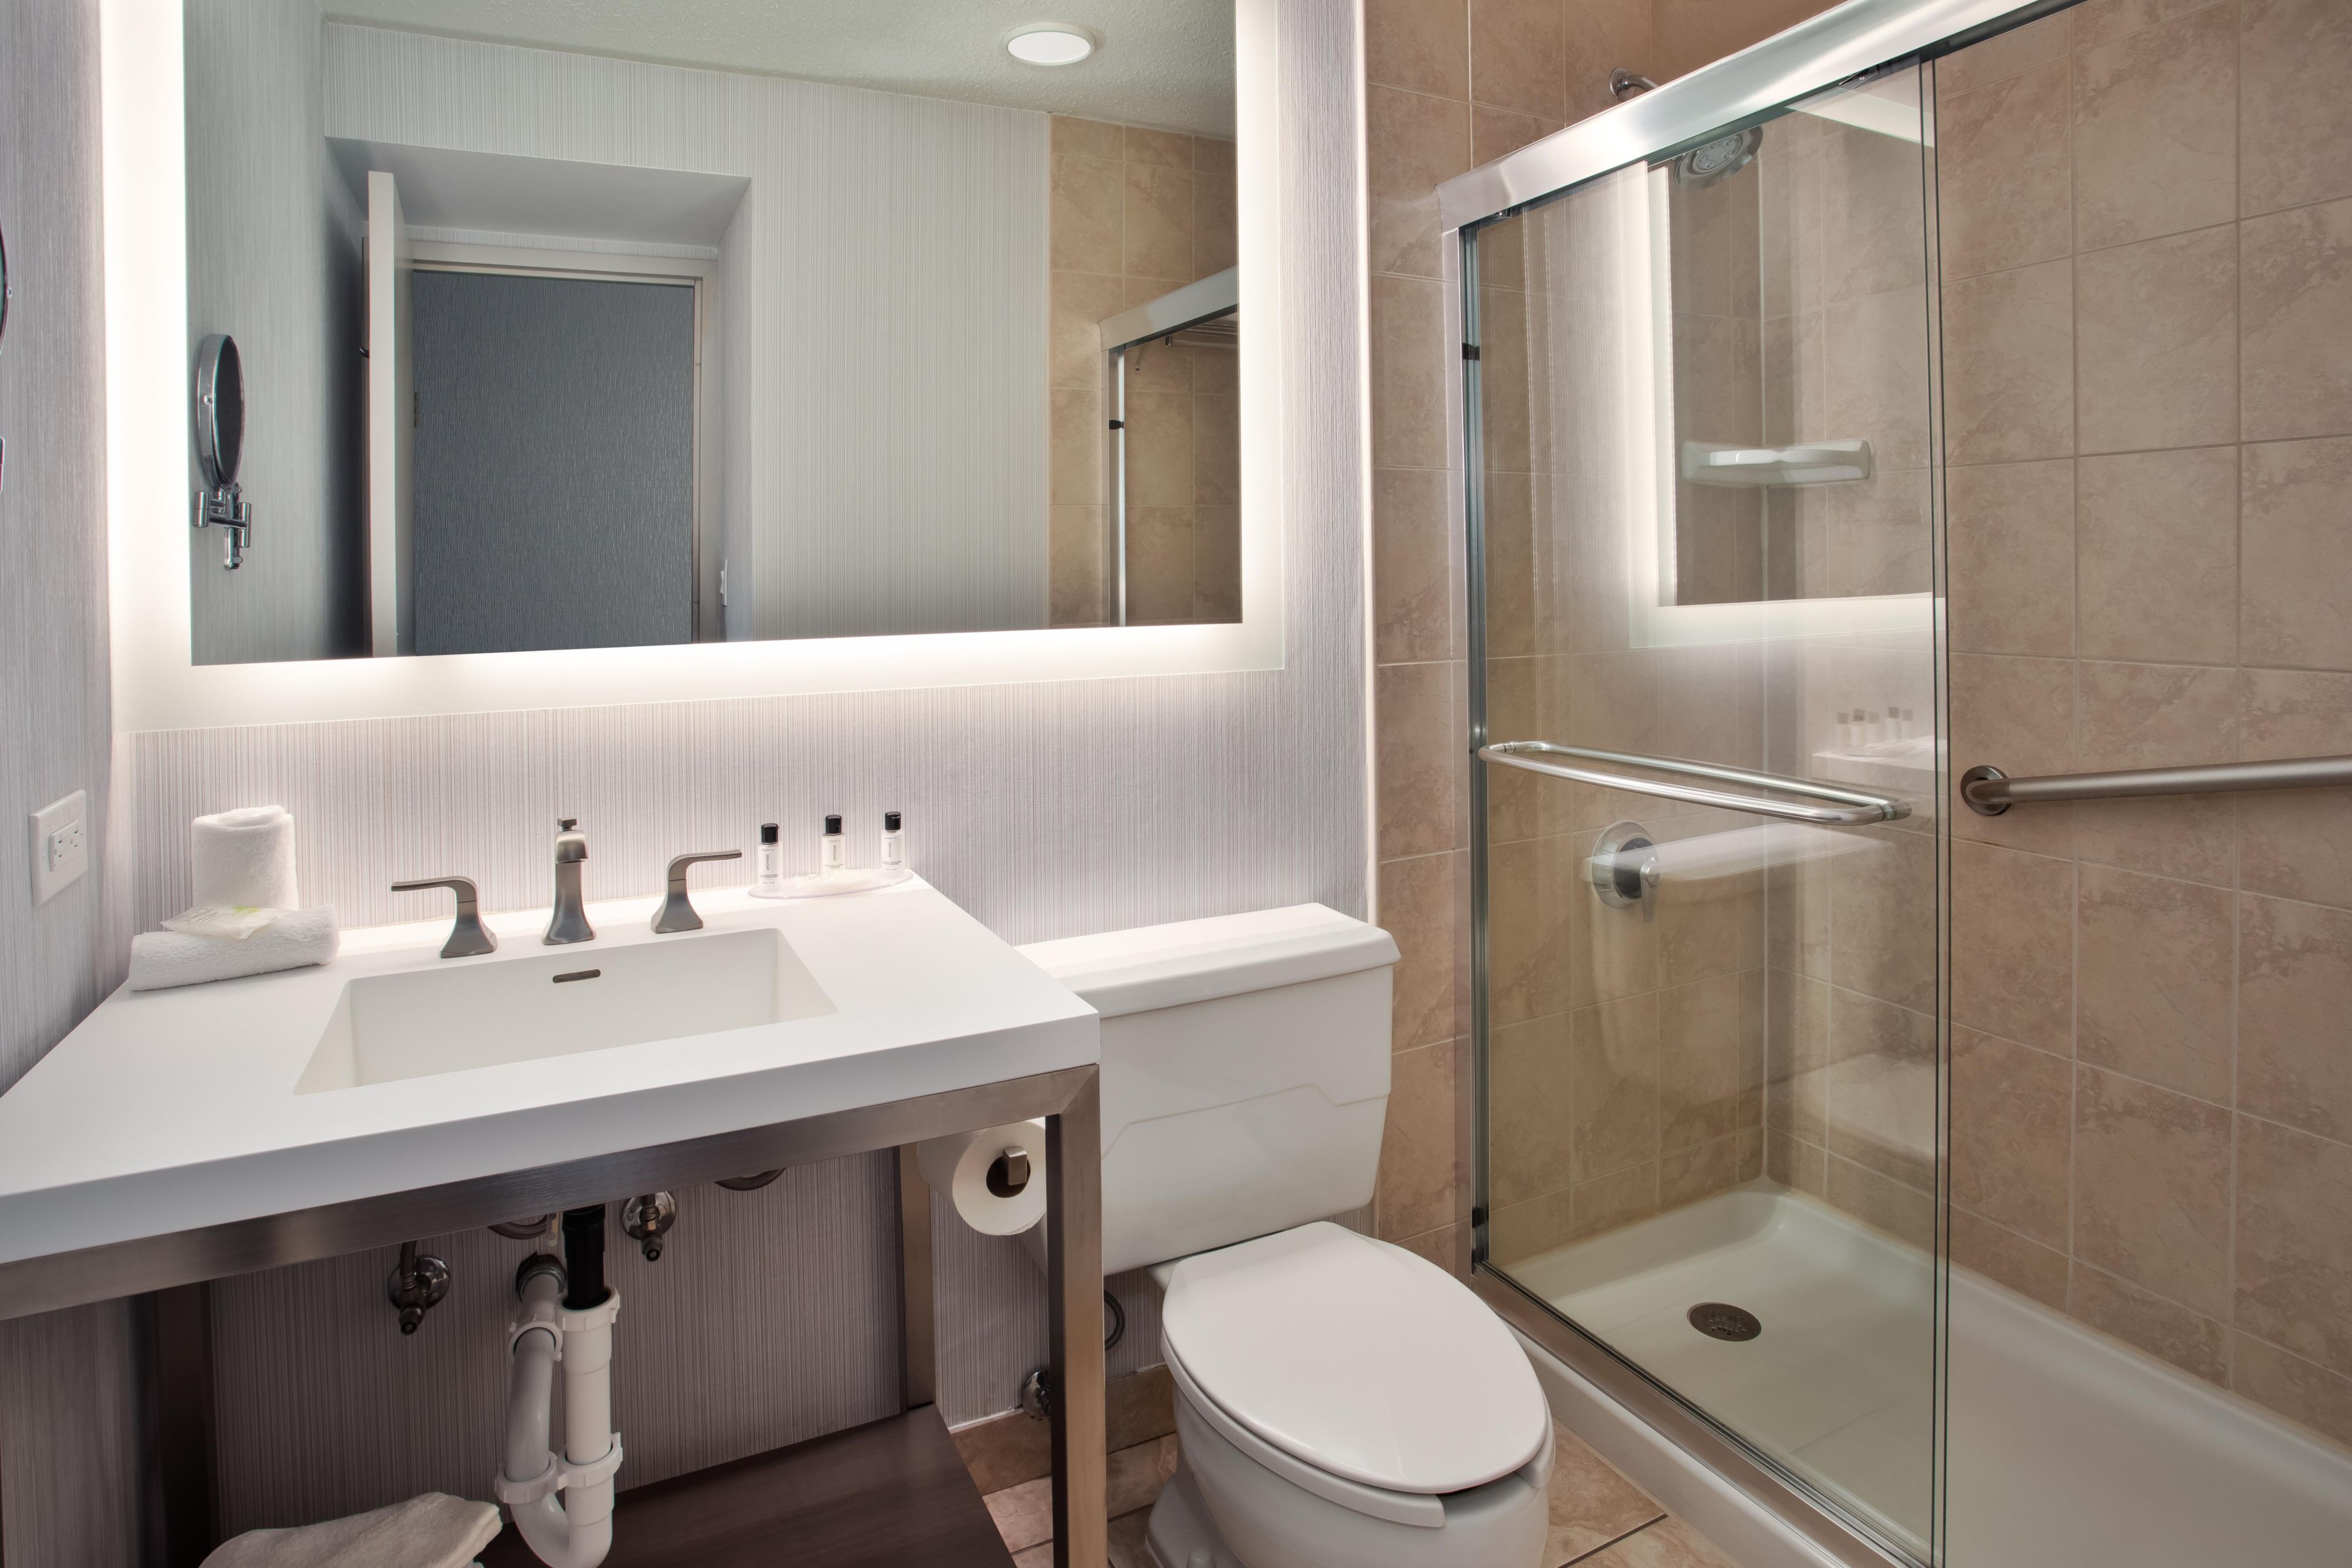 Guest room bathroom with modern amenities